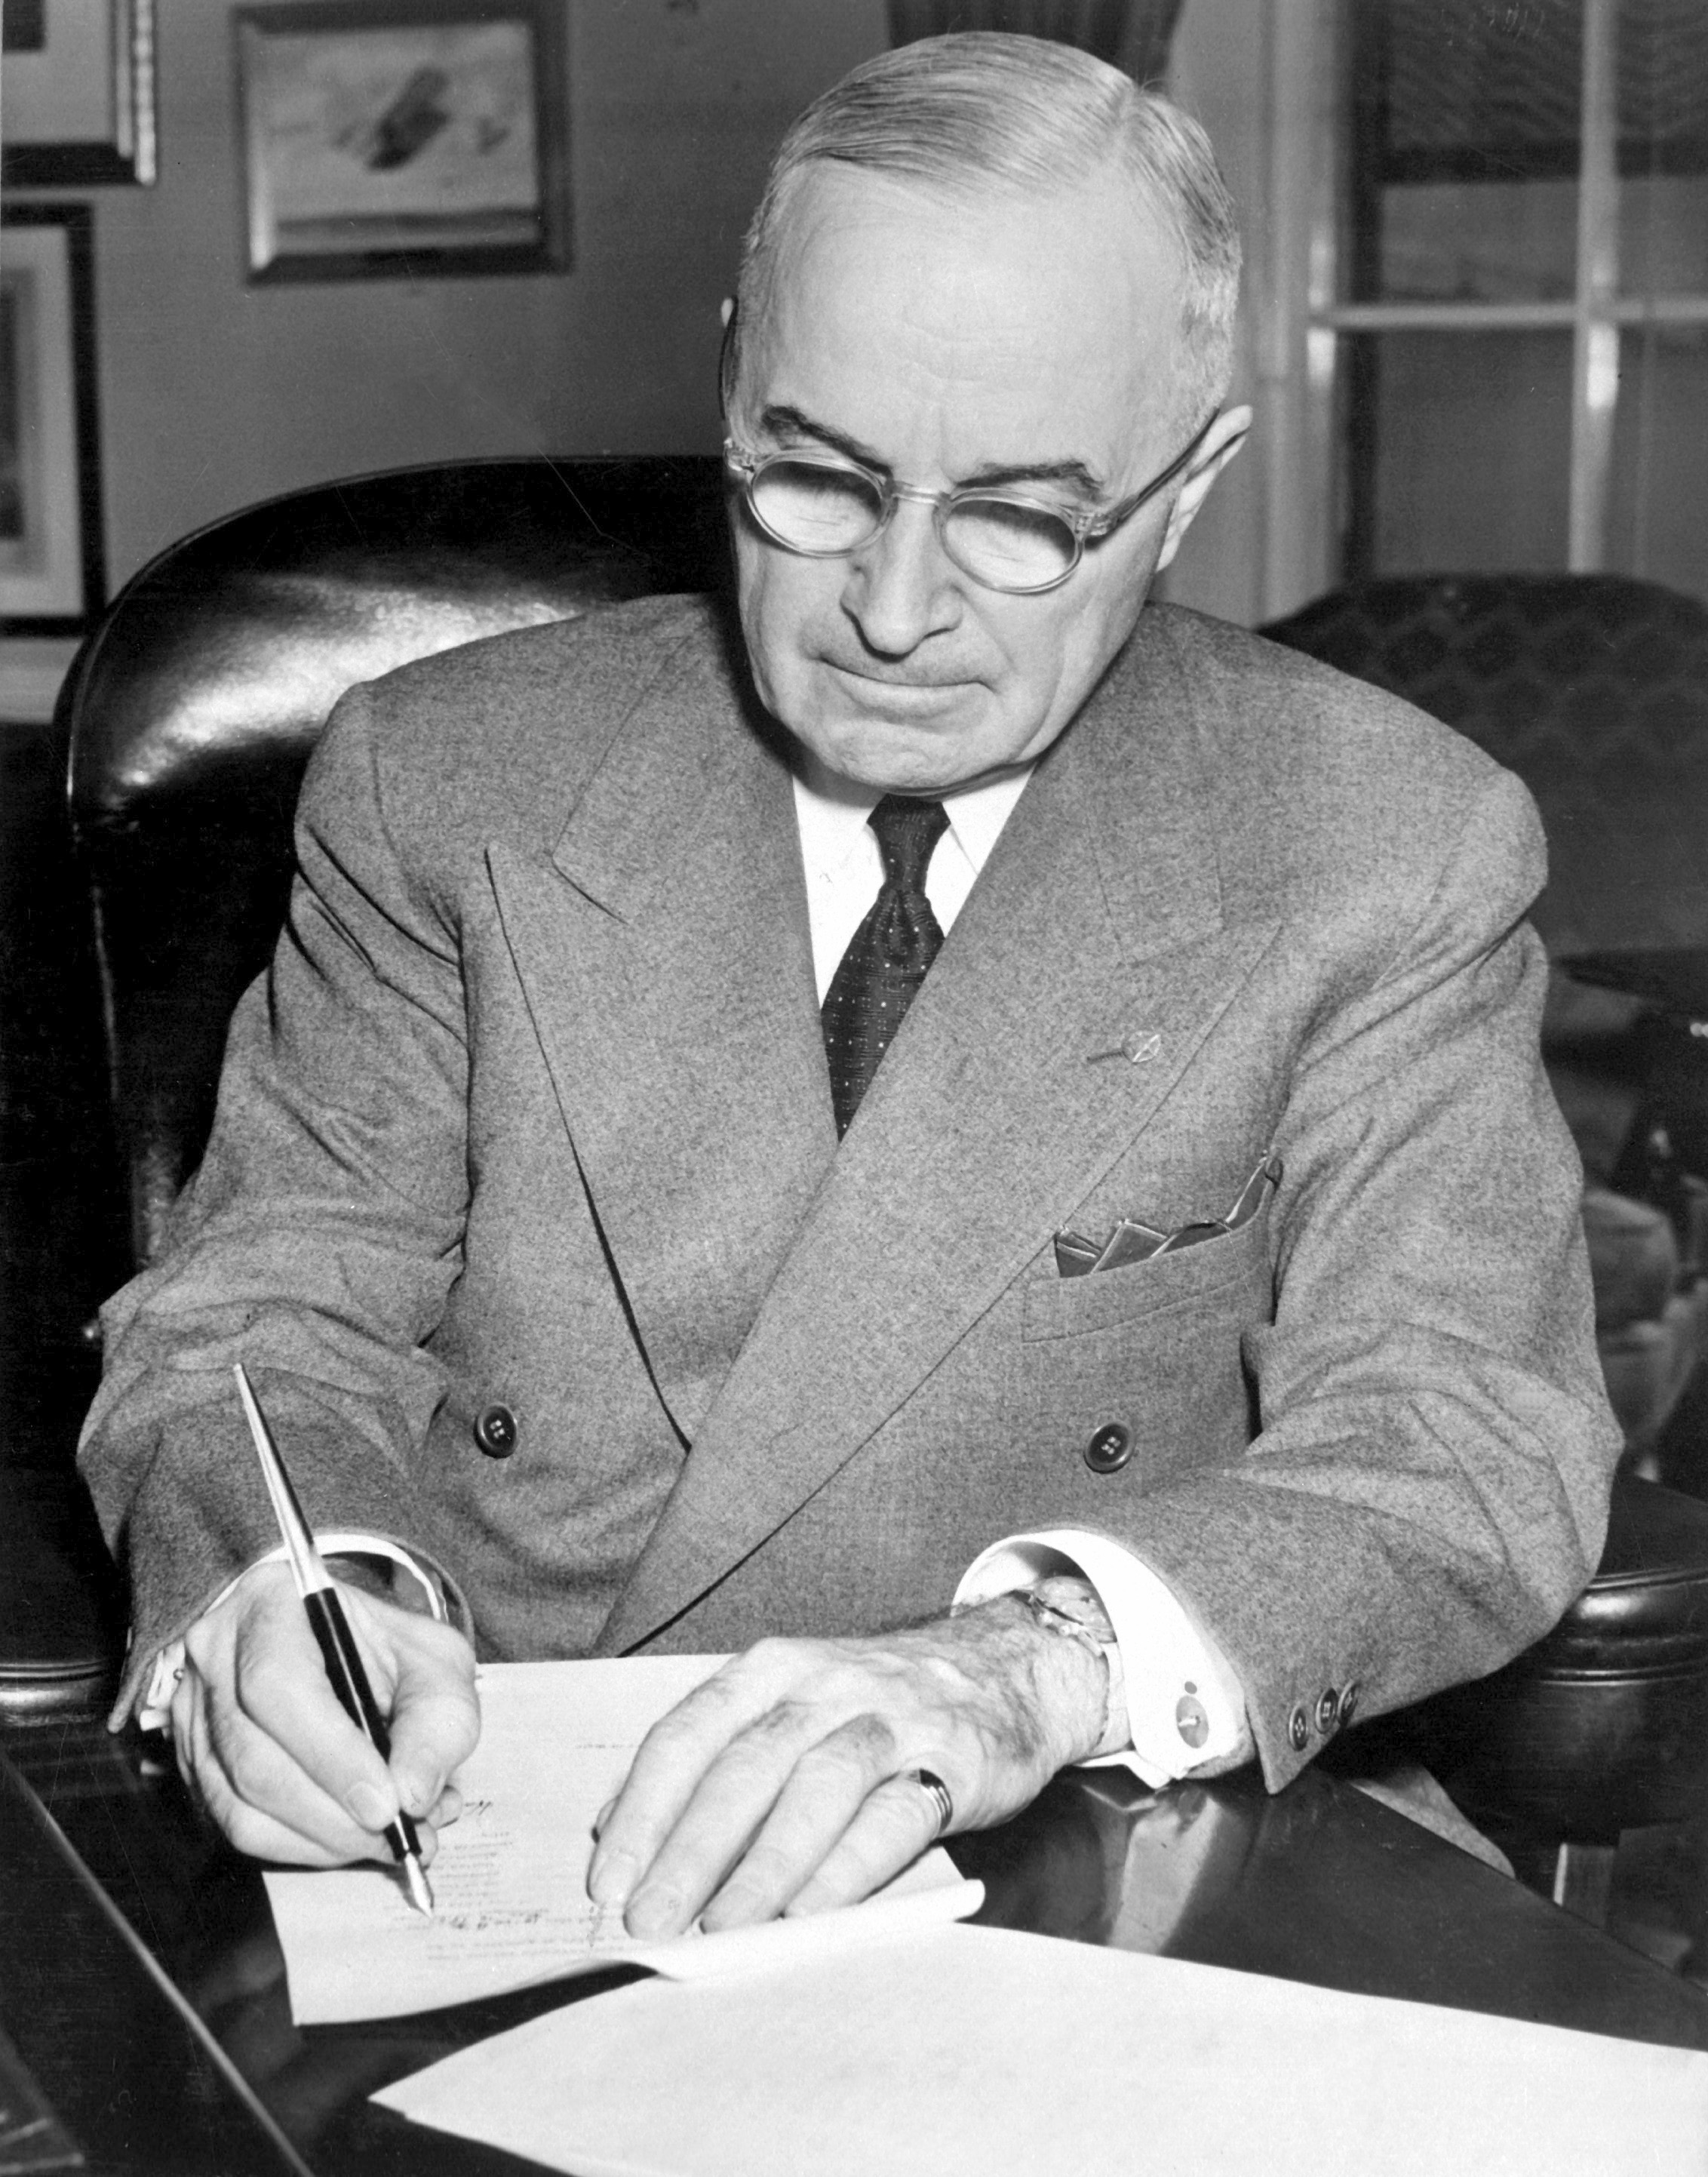 US President Harry Truman signing the proclamation declaring a national emergency, White House, Washington DC, United States, 16 Dec 1950